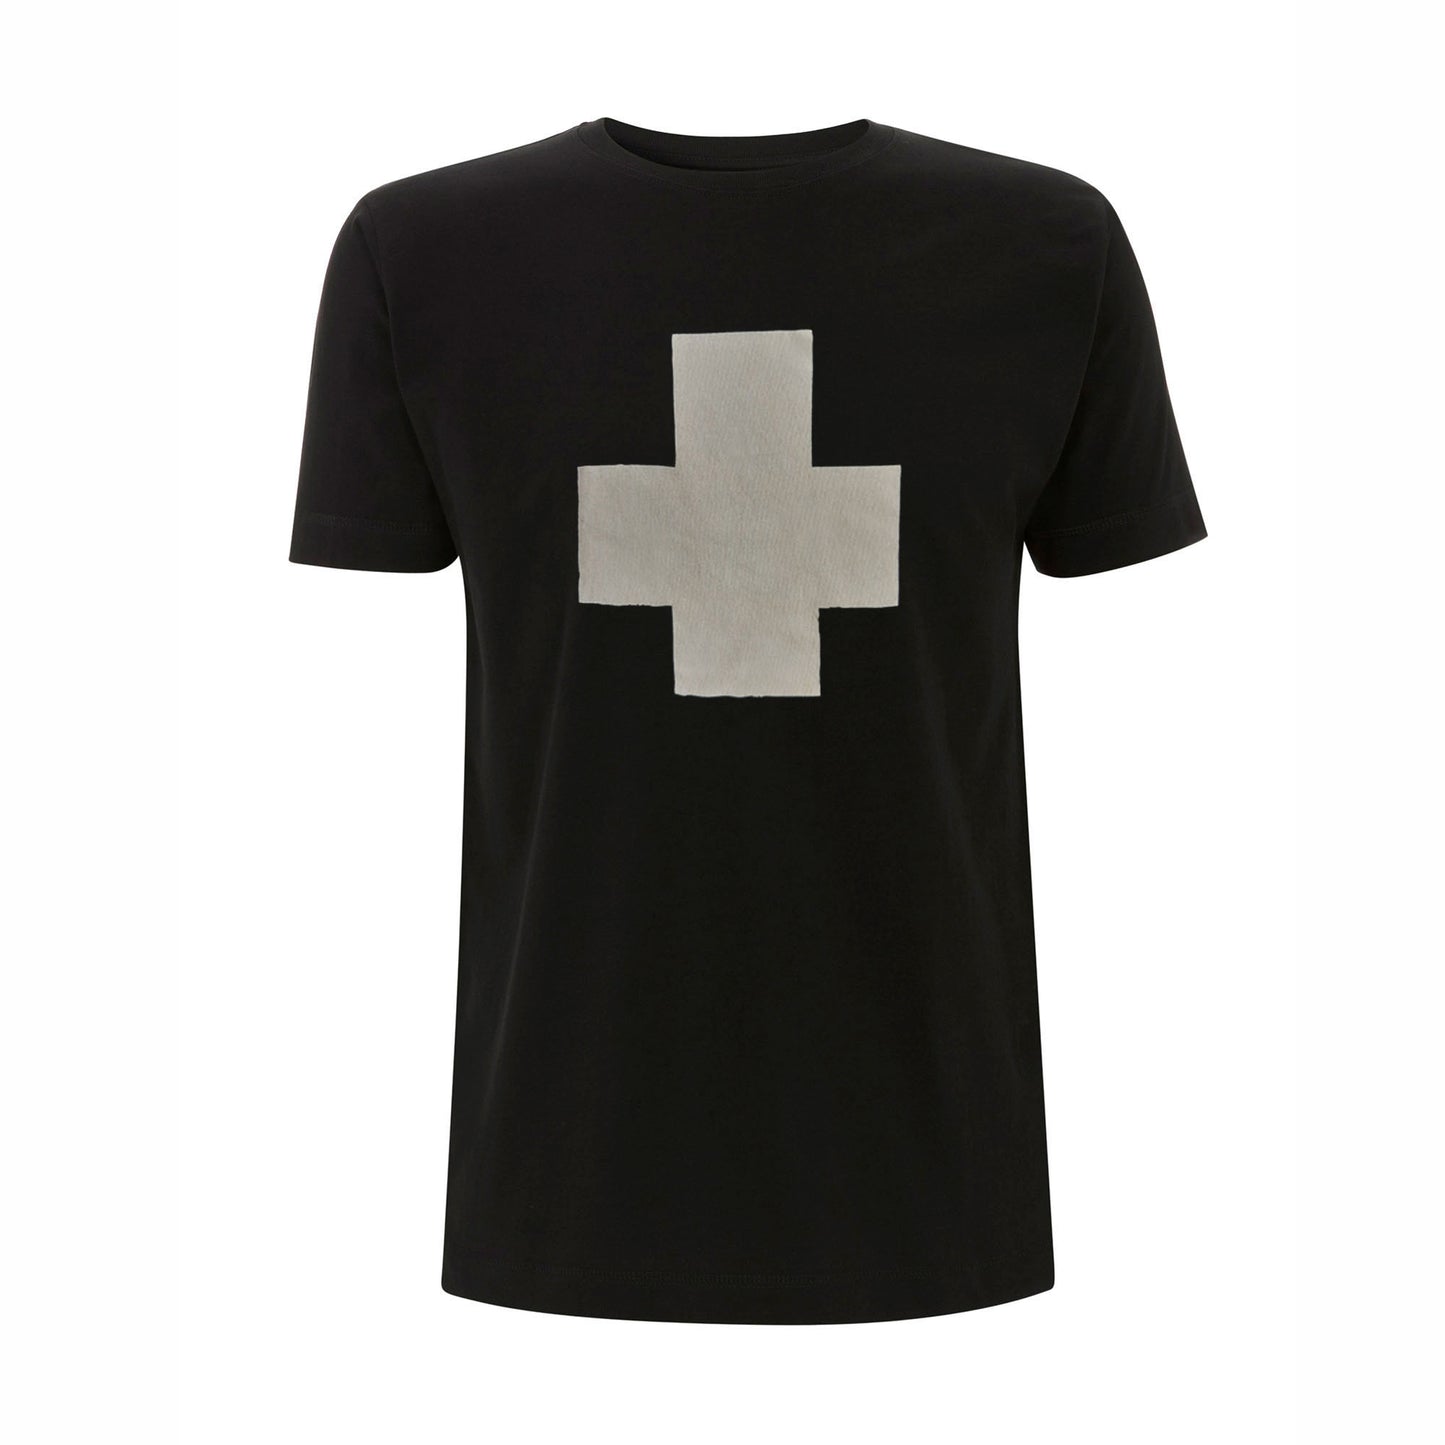 Think Negative Laibach - New Edition - T-Shirt